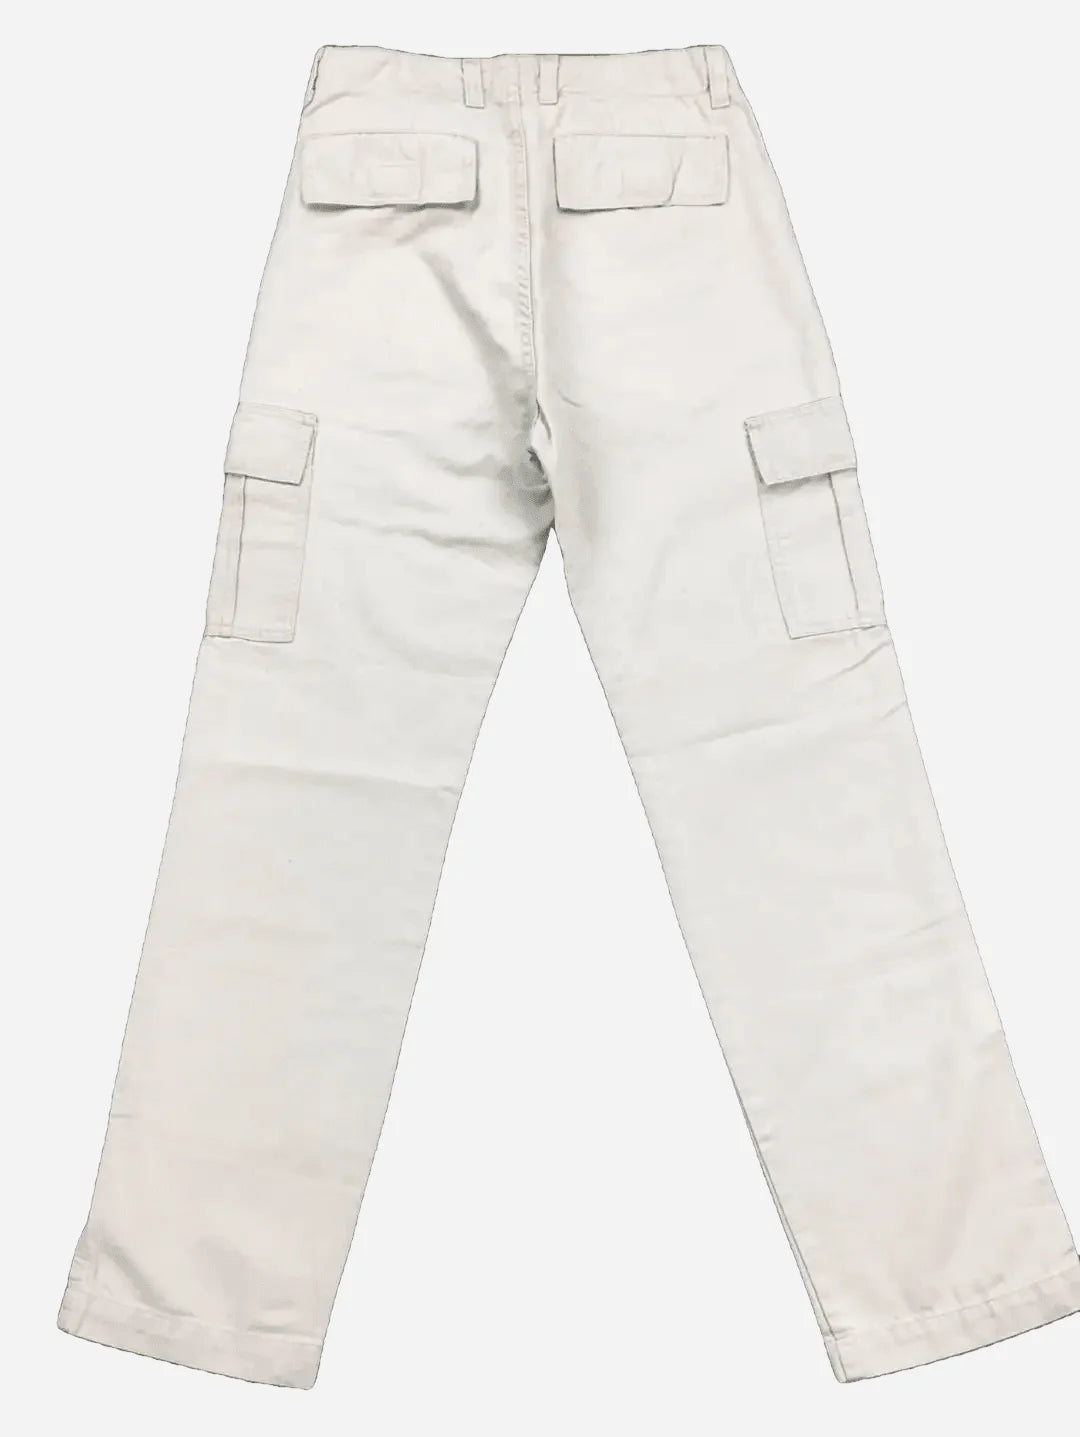 Tom Tailor Cargo Pants 28/30 (S)